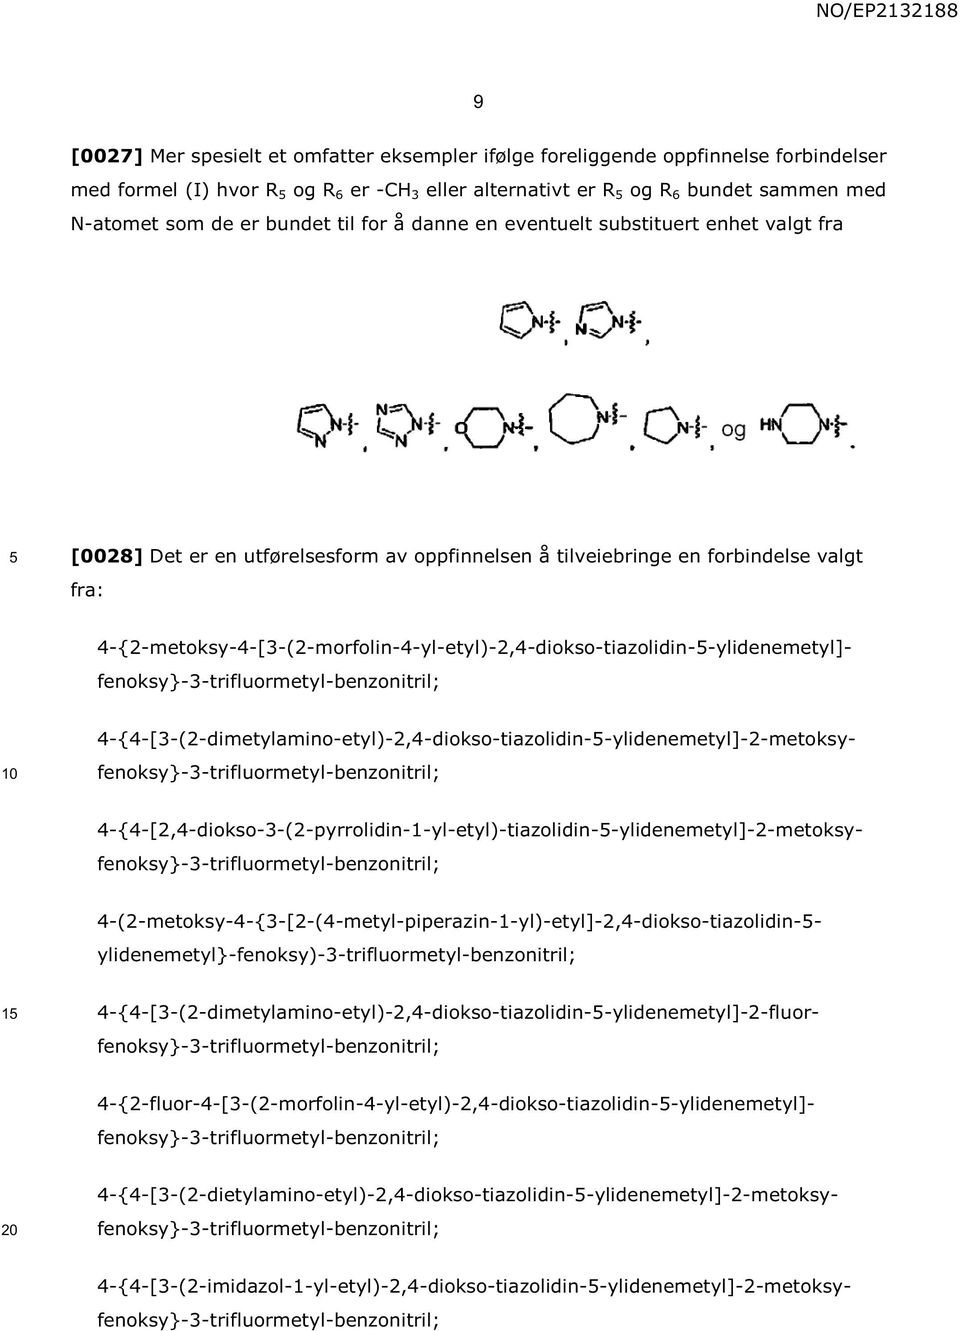 ylidenemetyl}-fenoksy)-3-trifluormetyl-benzonitril; 1 fenoksy}-3-trifluormetyl-benzonitril; fenoksy}-3-trifluormetyl-benzonitril;